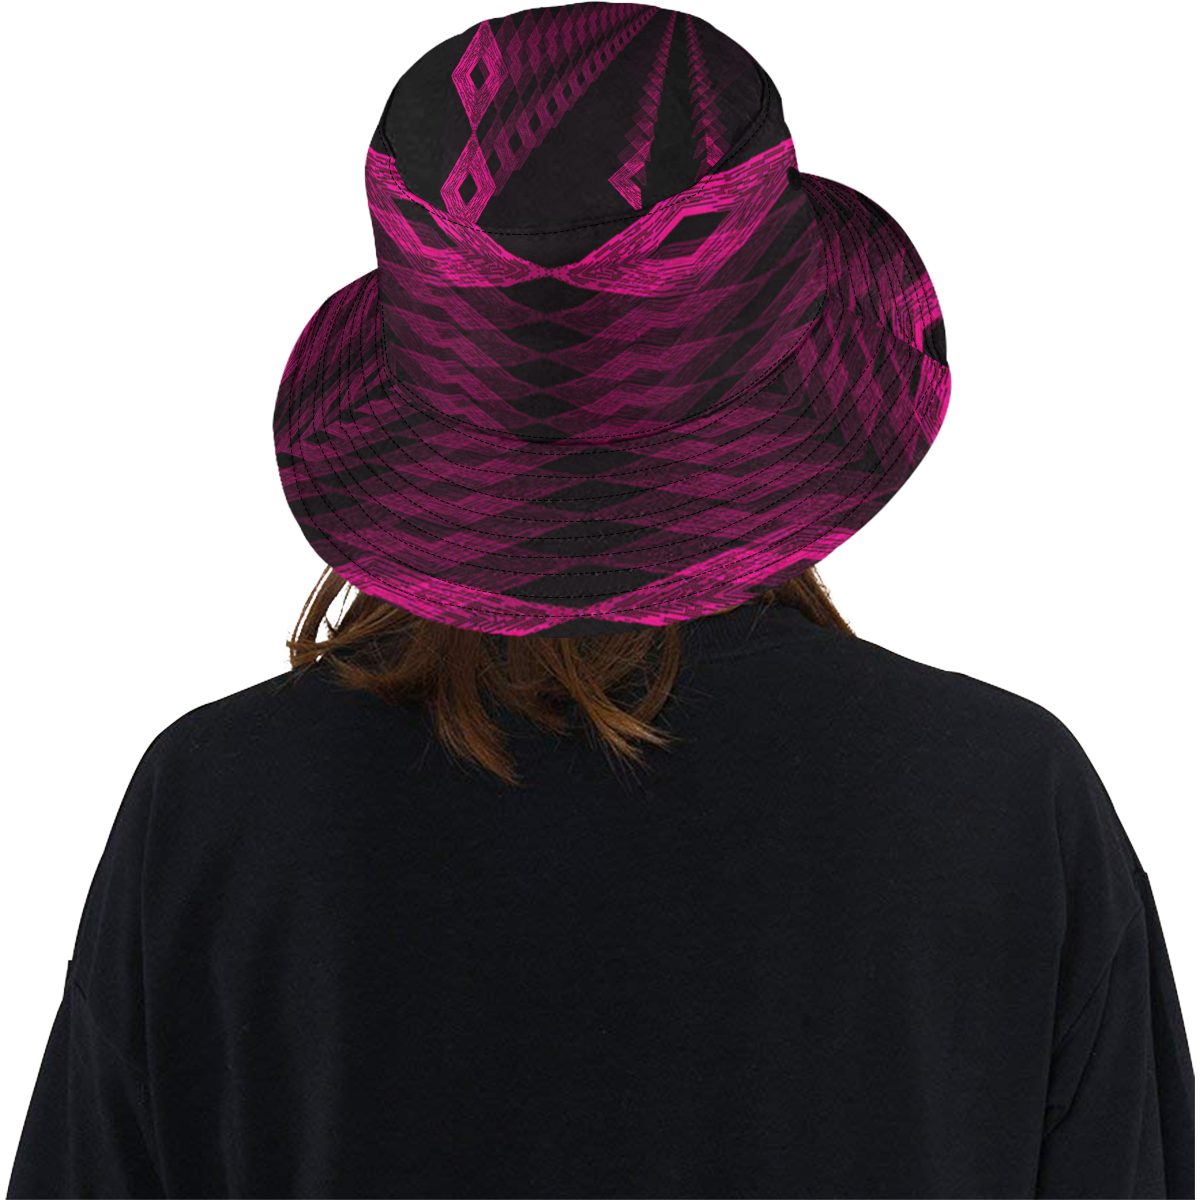 Pinktyz All Over Print Bucket Hat